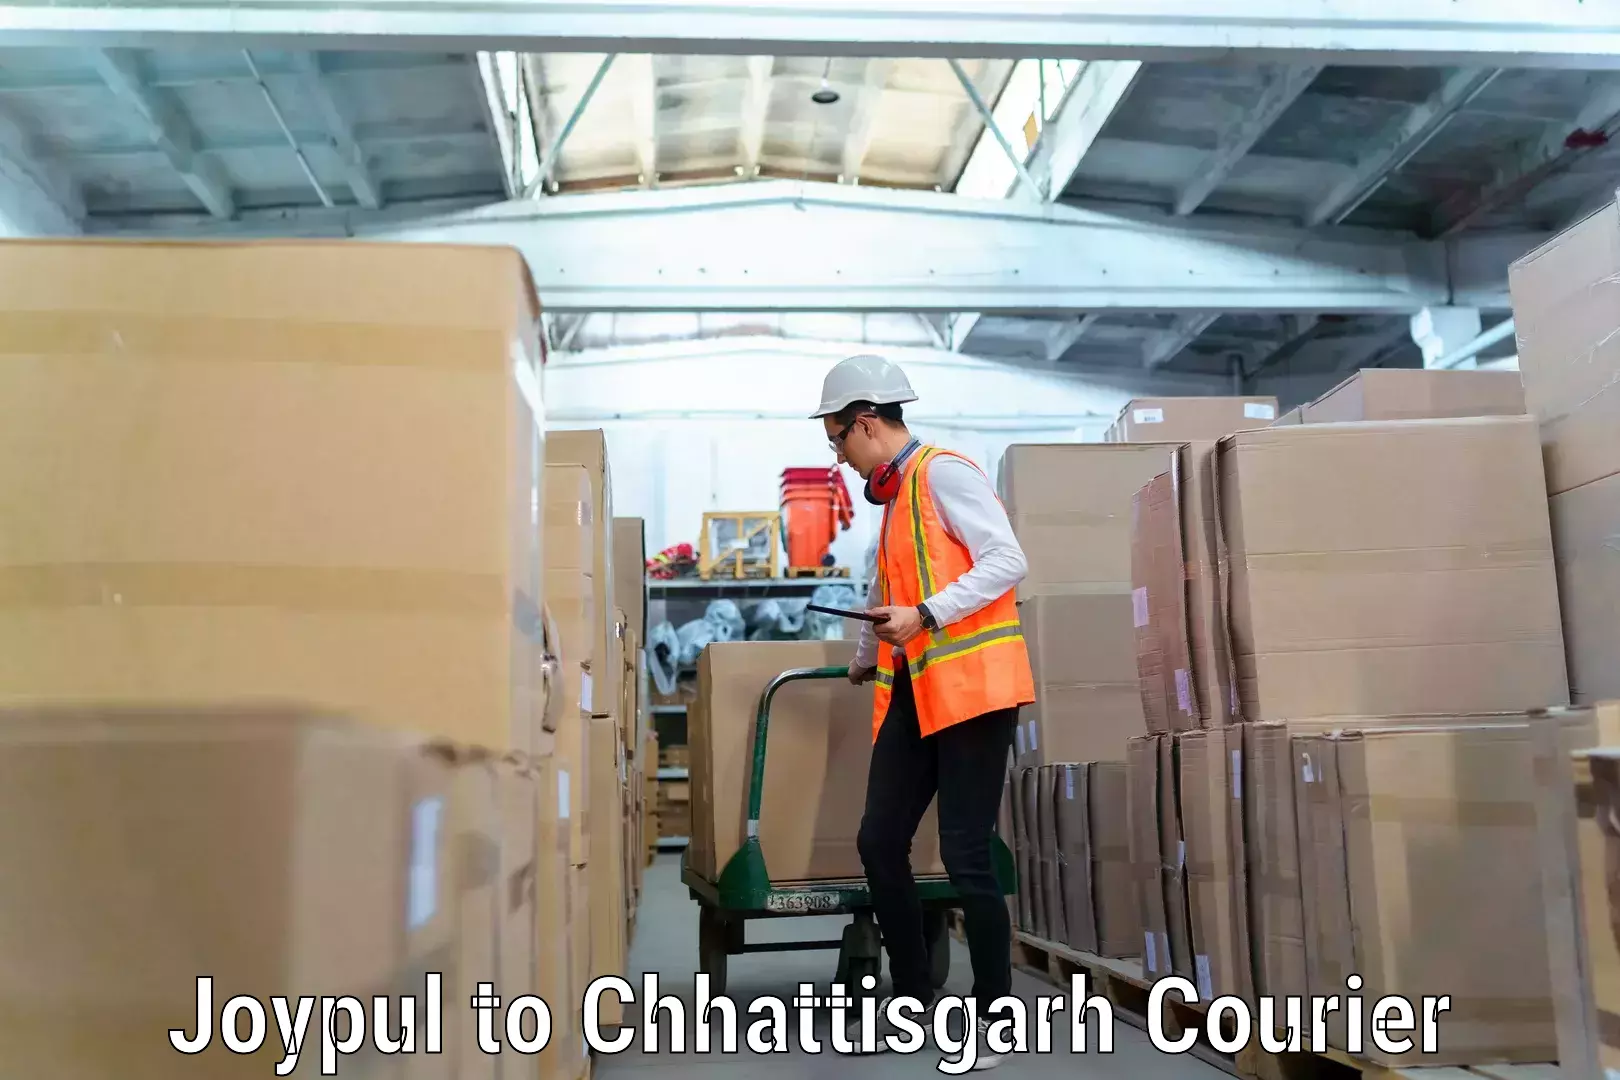 Furniture relocation experts Joypul to Chhattisgarh